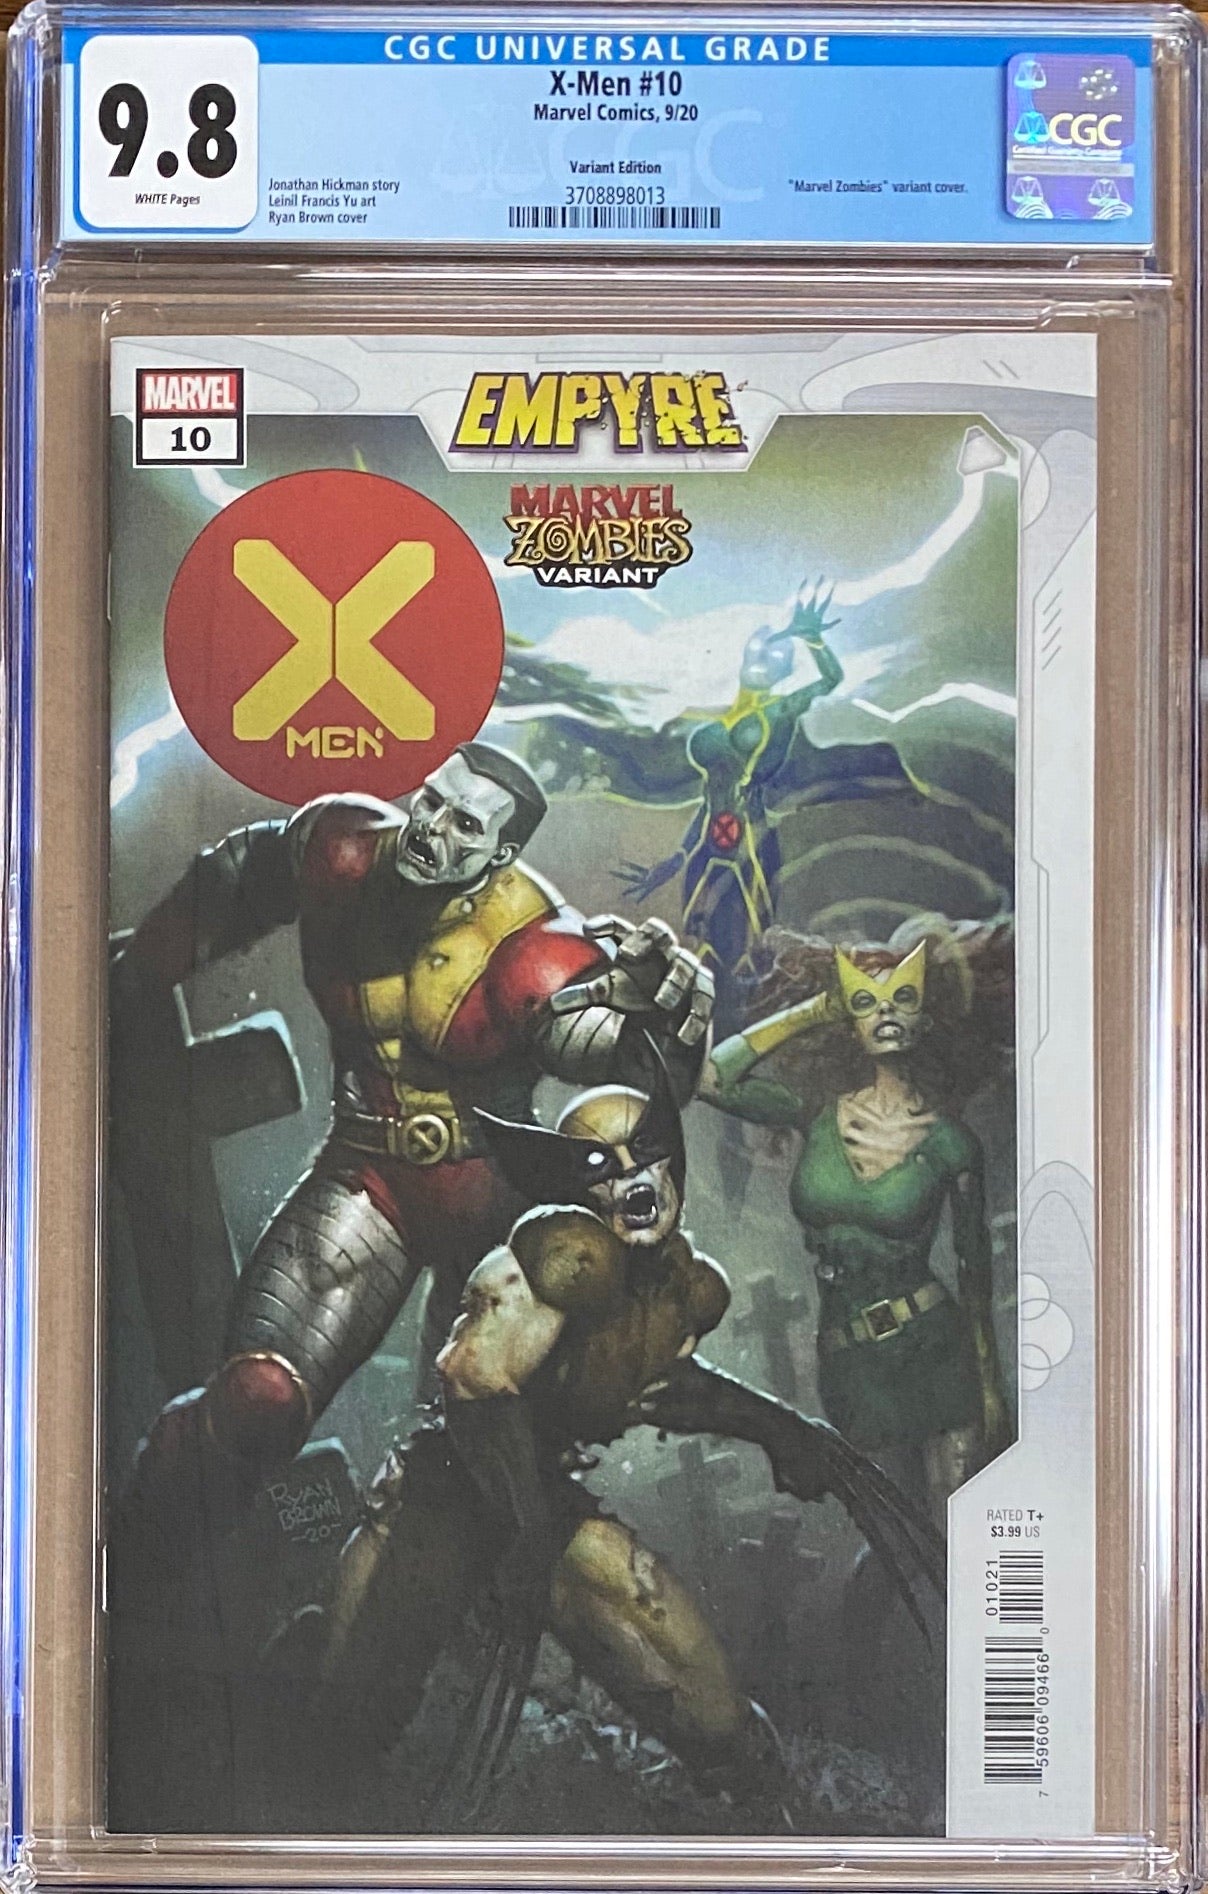 X-Men #10 "Zombies" Variant CGC 9.8 - Empyre